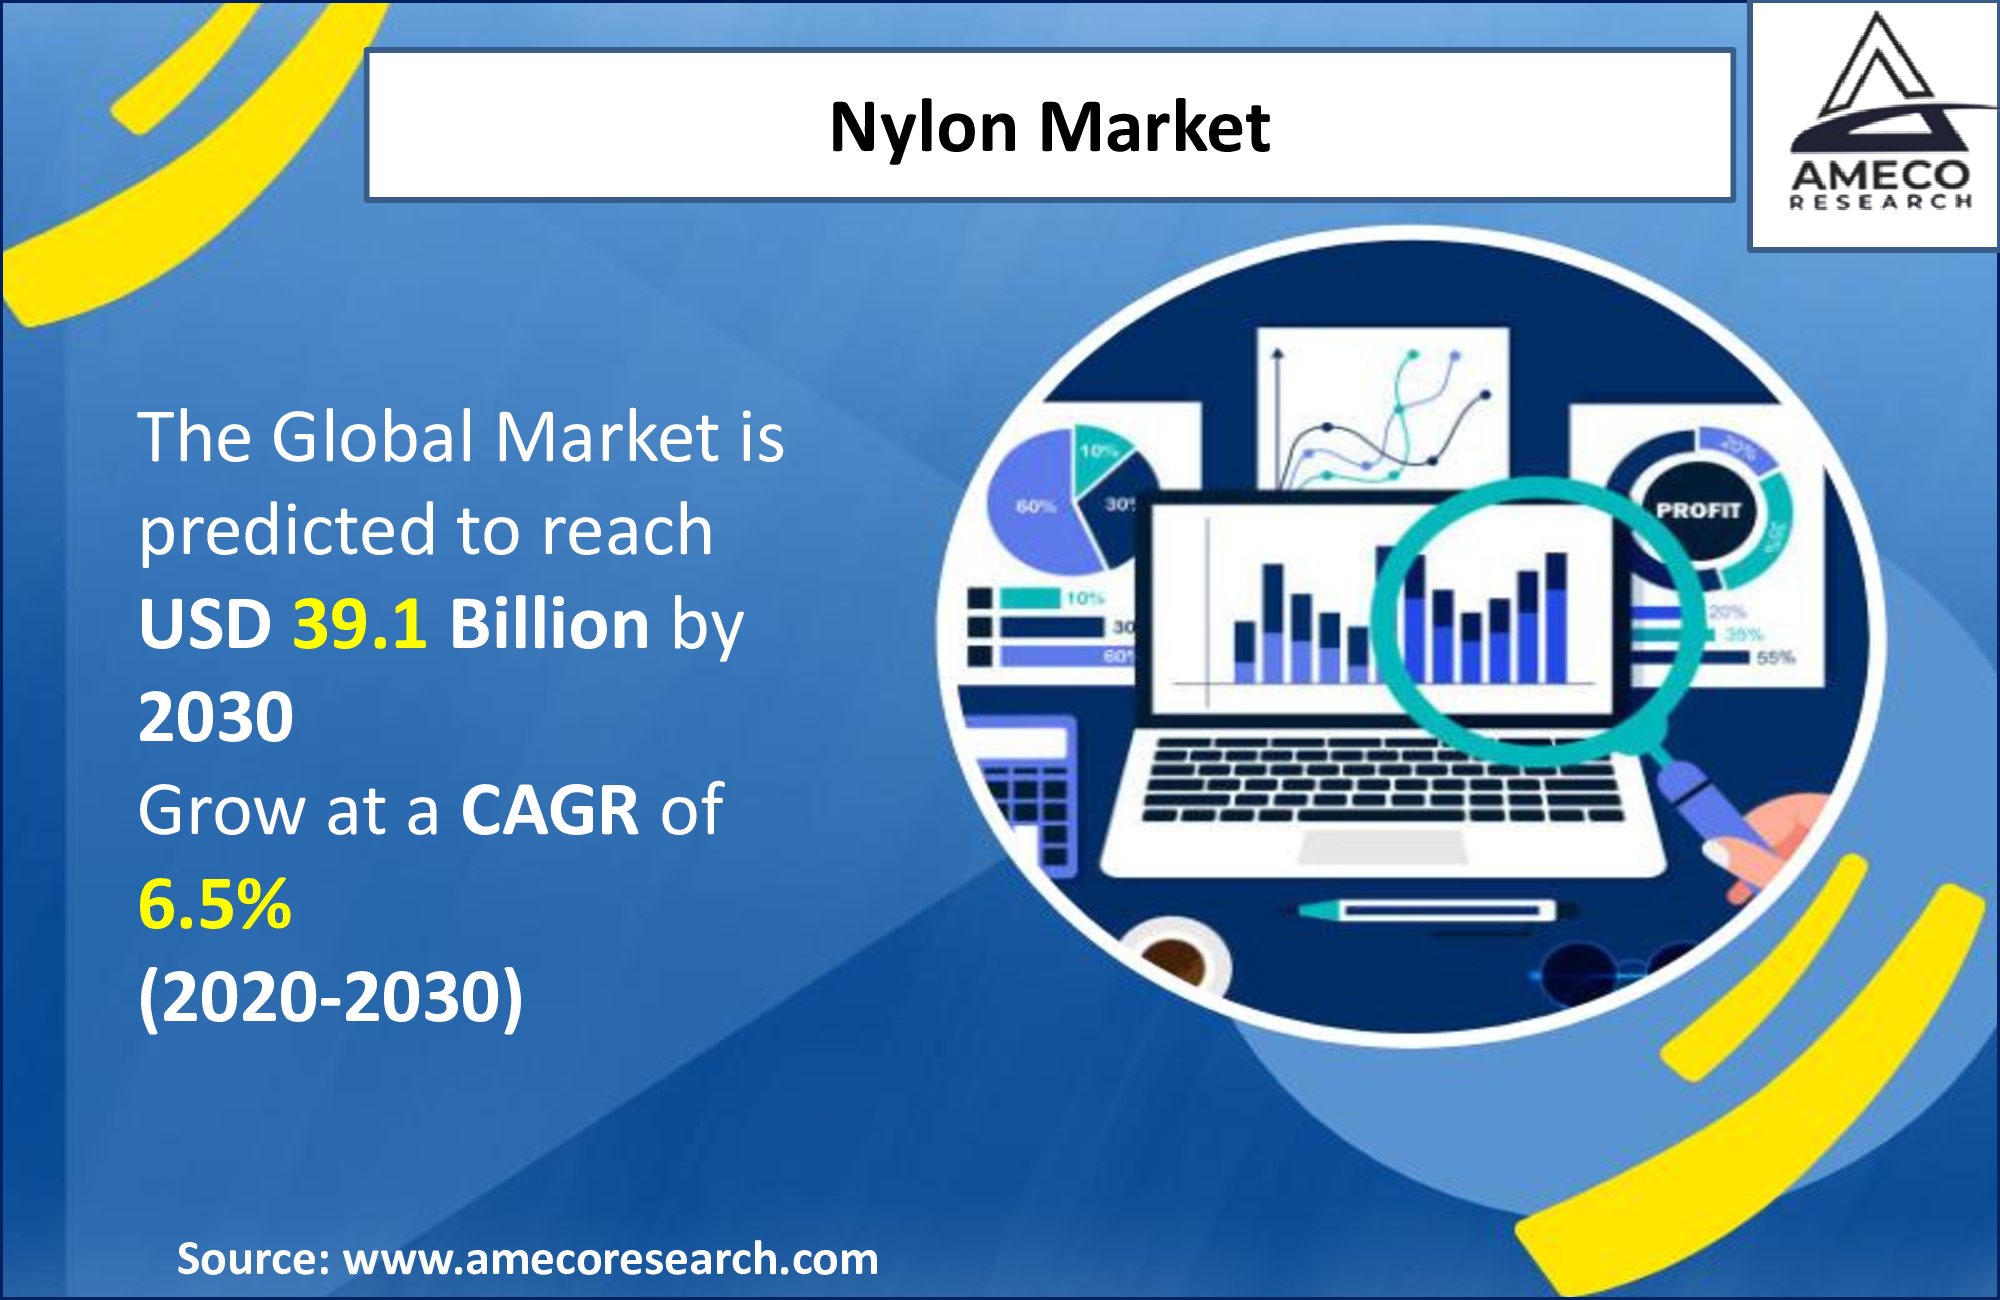 Nylon Market